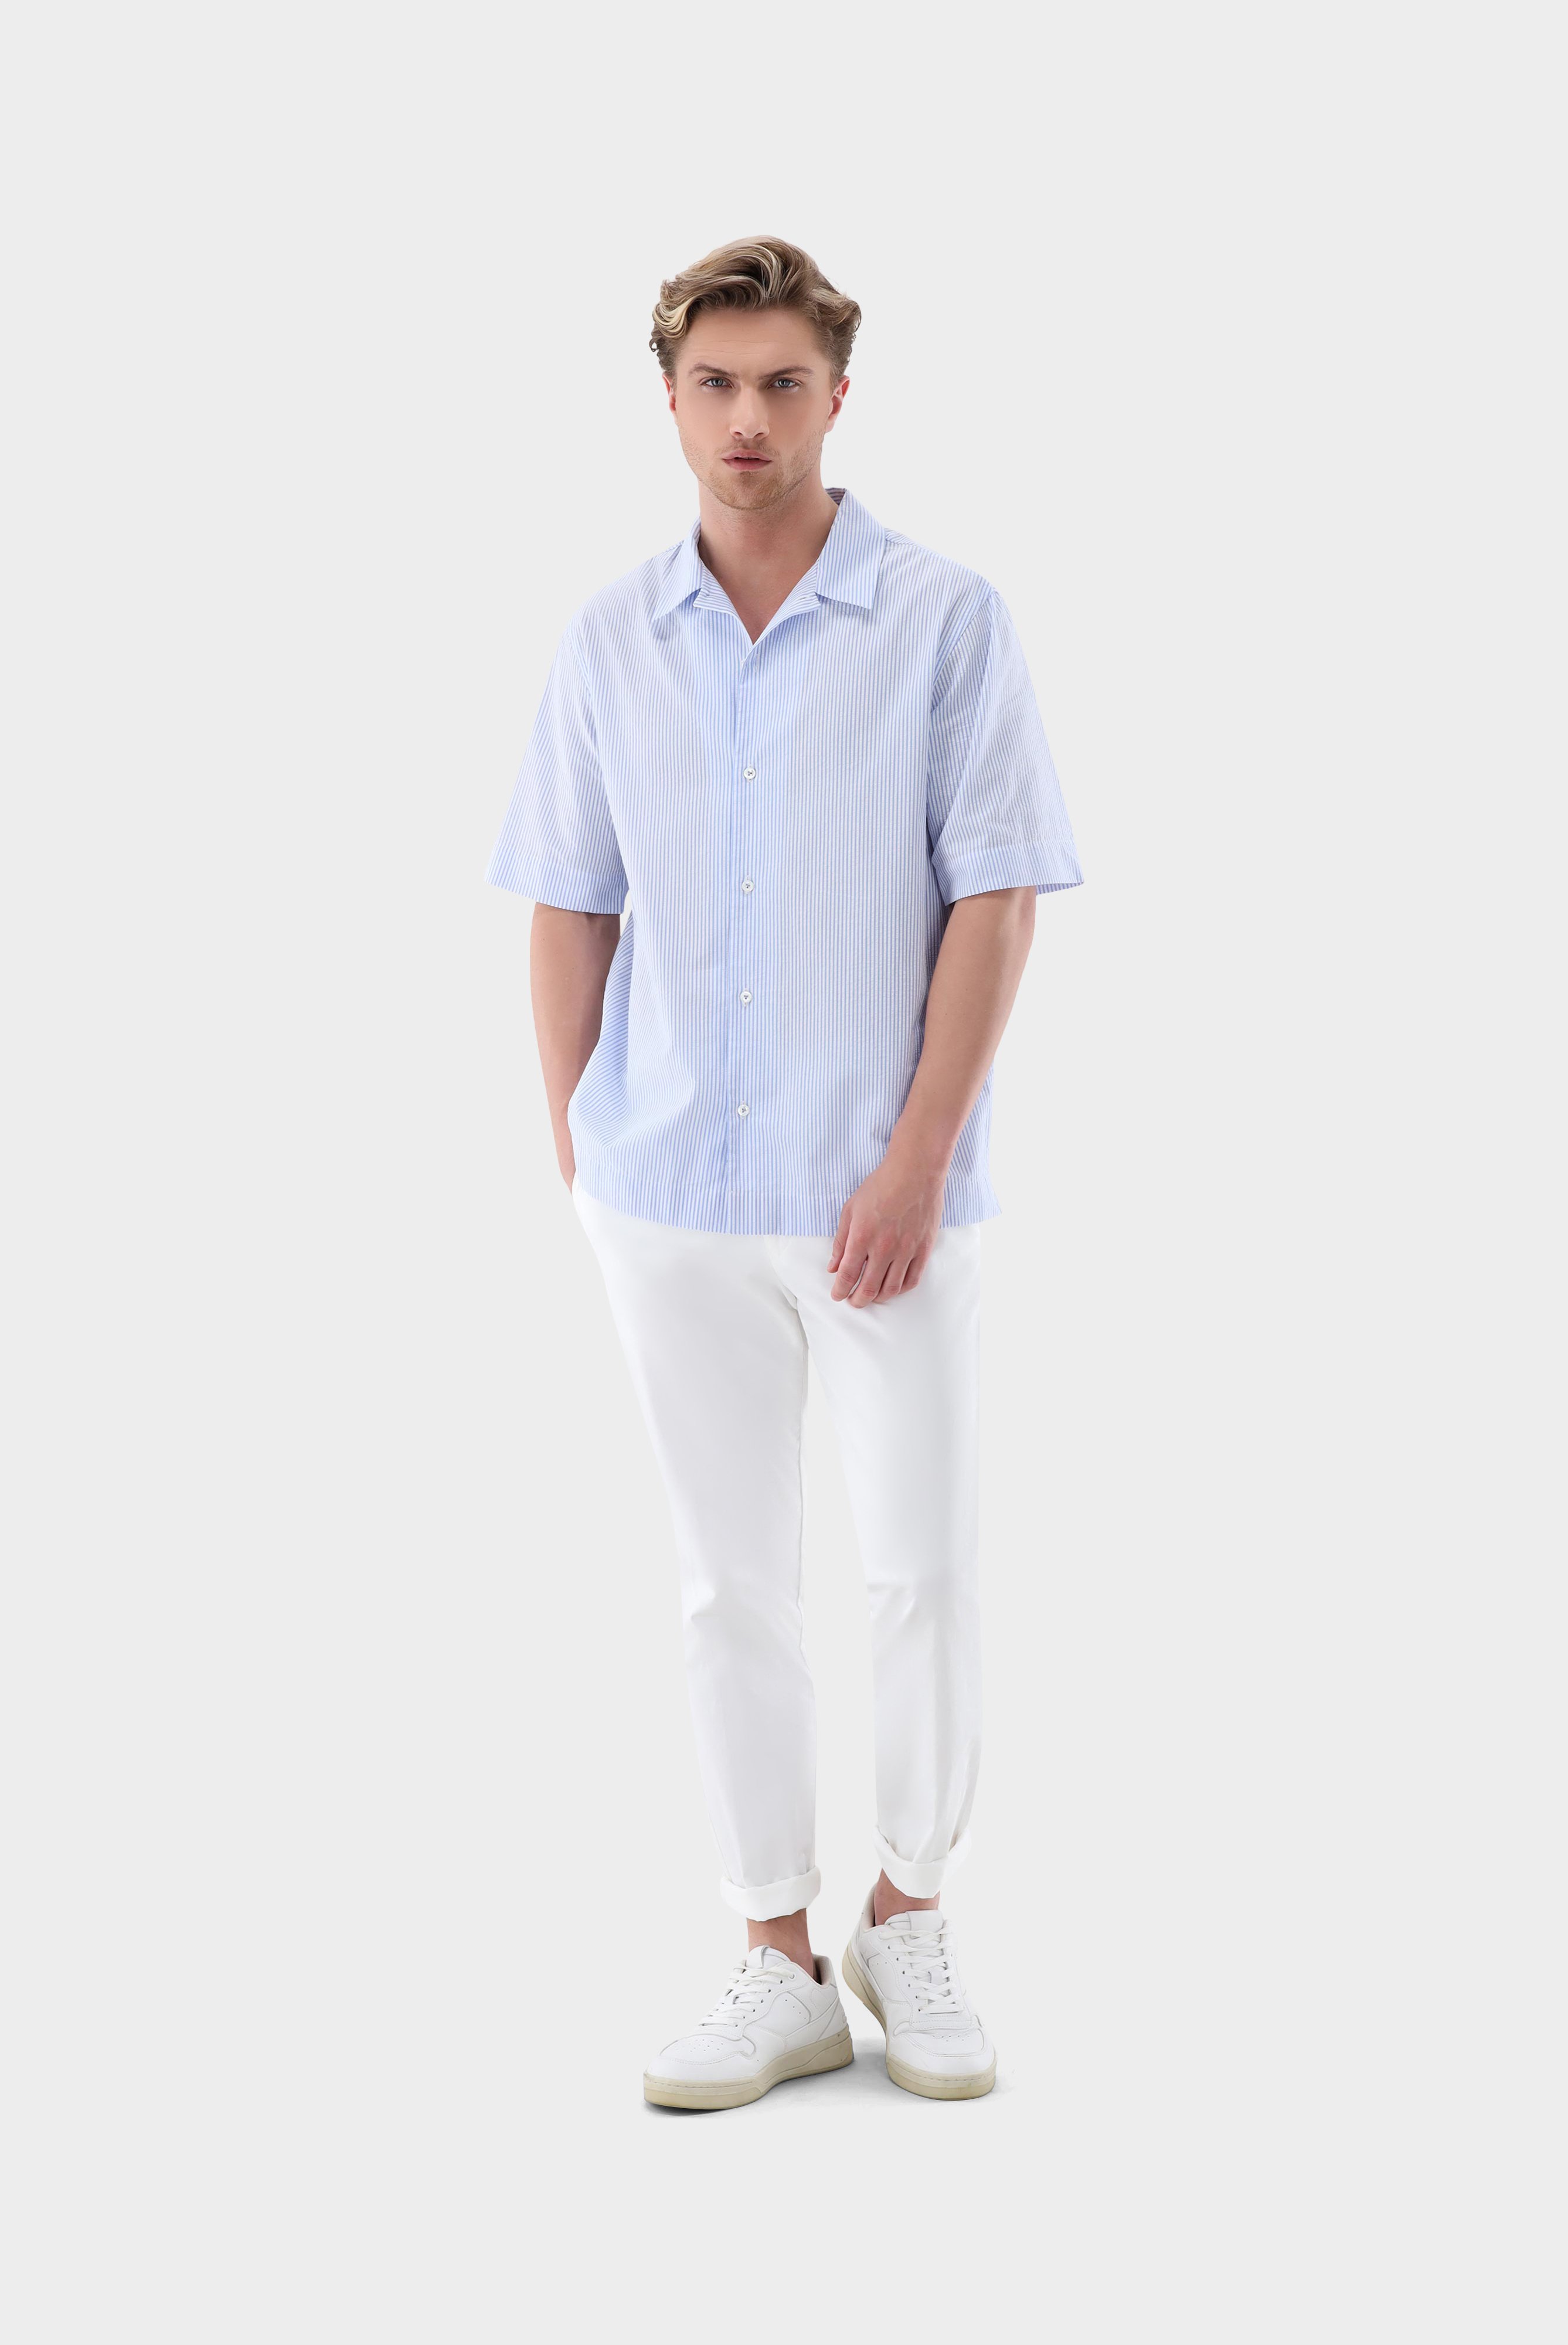 Casual Shirts+Fine Striped Short Sleeved Cotton Seersucker Shirt+20.2078.RD.151054.720.S